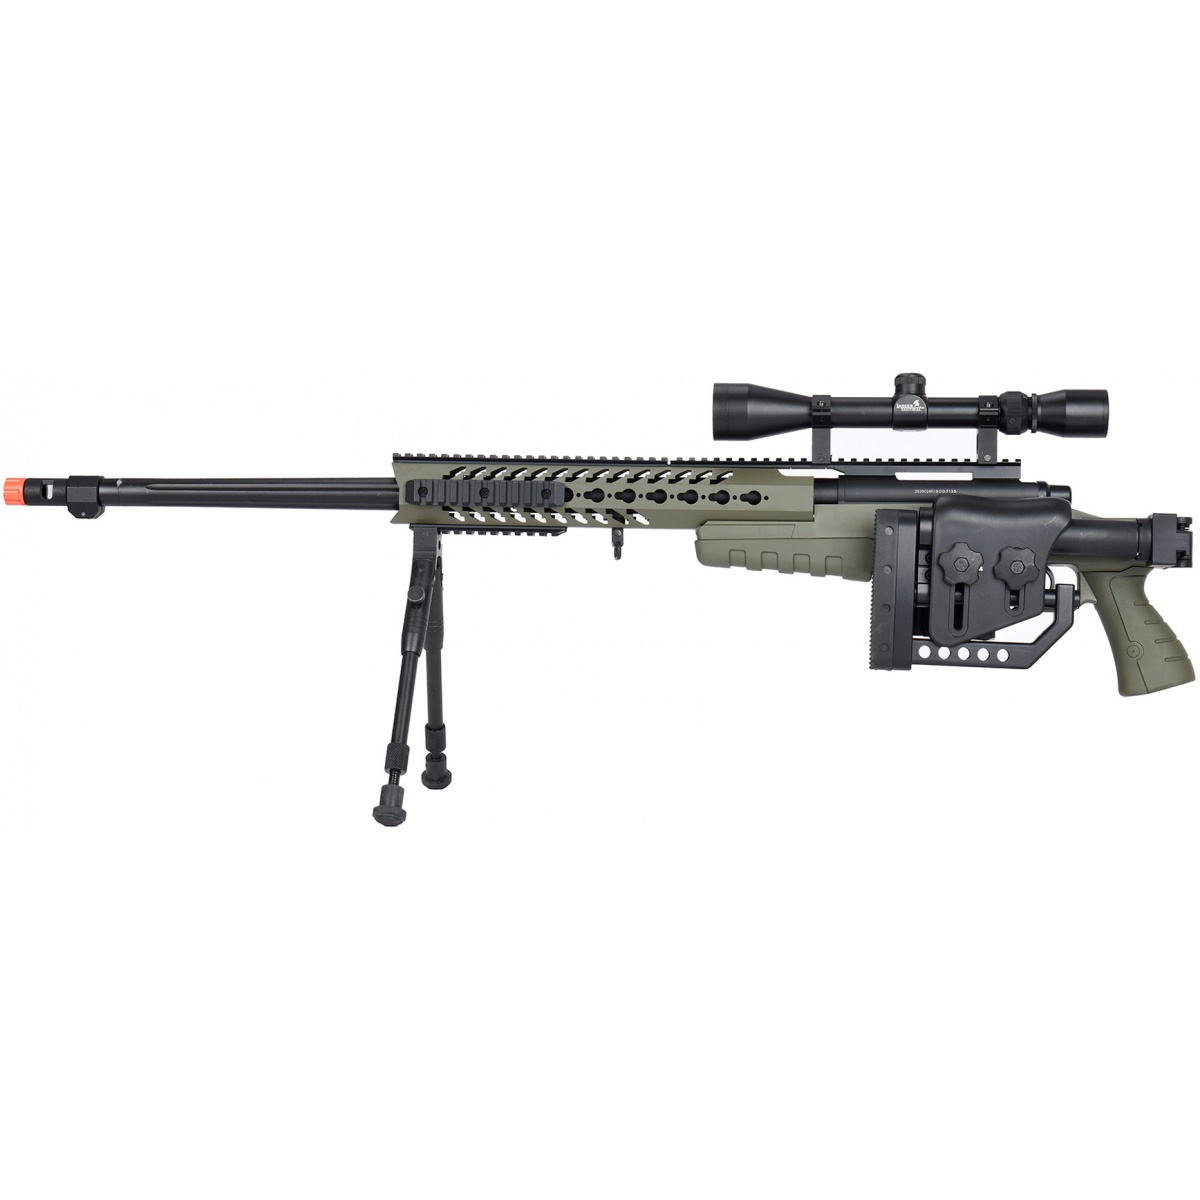 Sniping for Beginners (& Intermediates), WellFire MB4418 Sniper Rifles